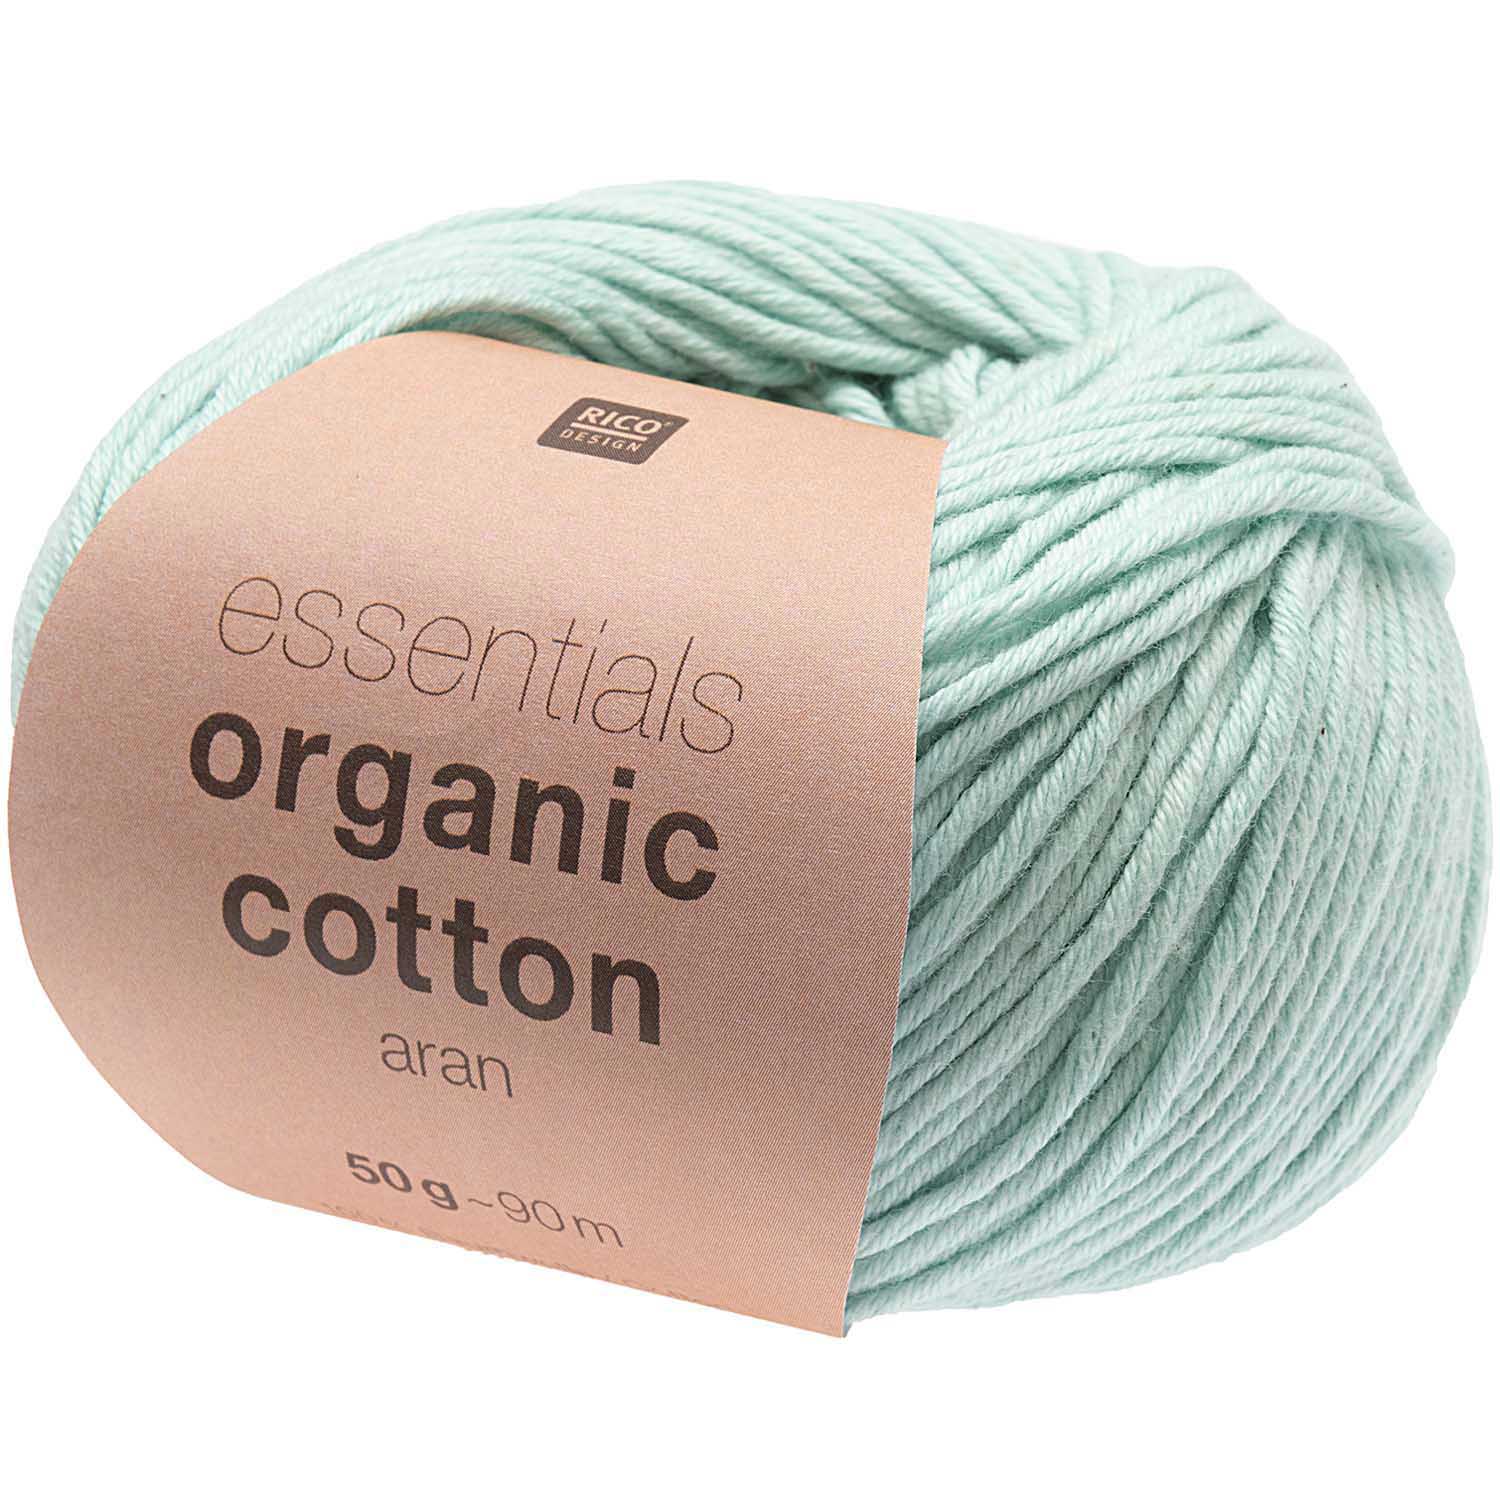 Rico Essentials Organic Cotton Aran 50g - Mint